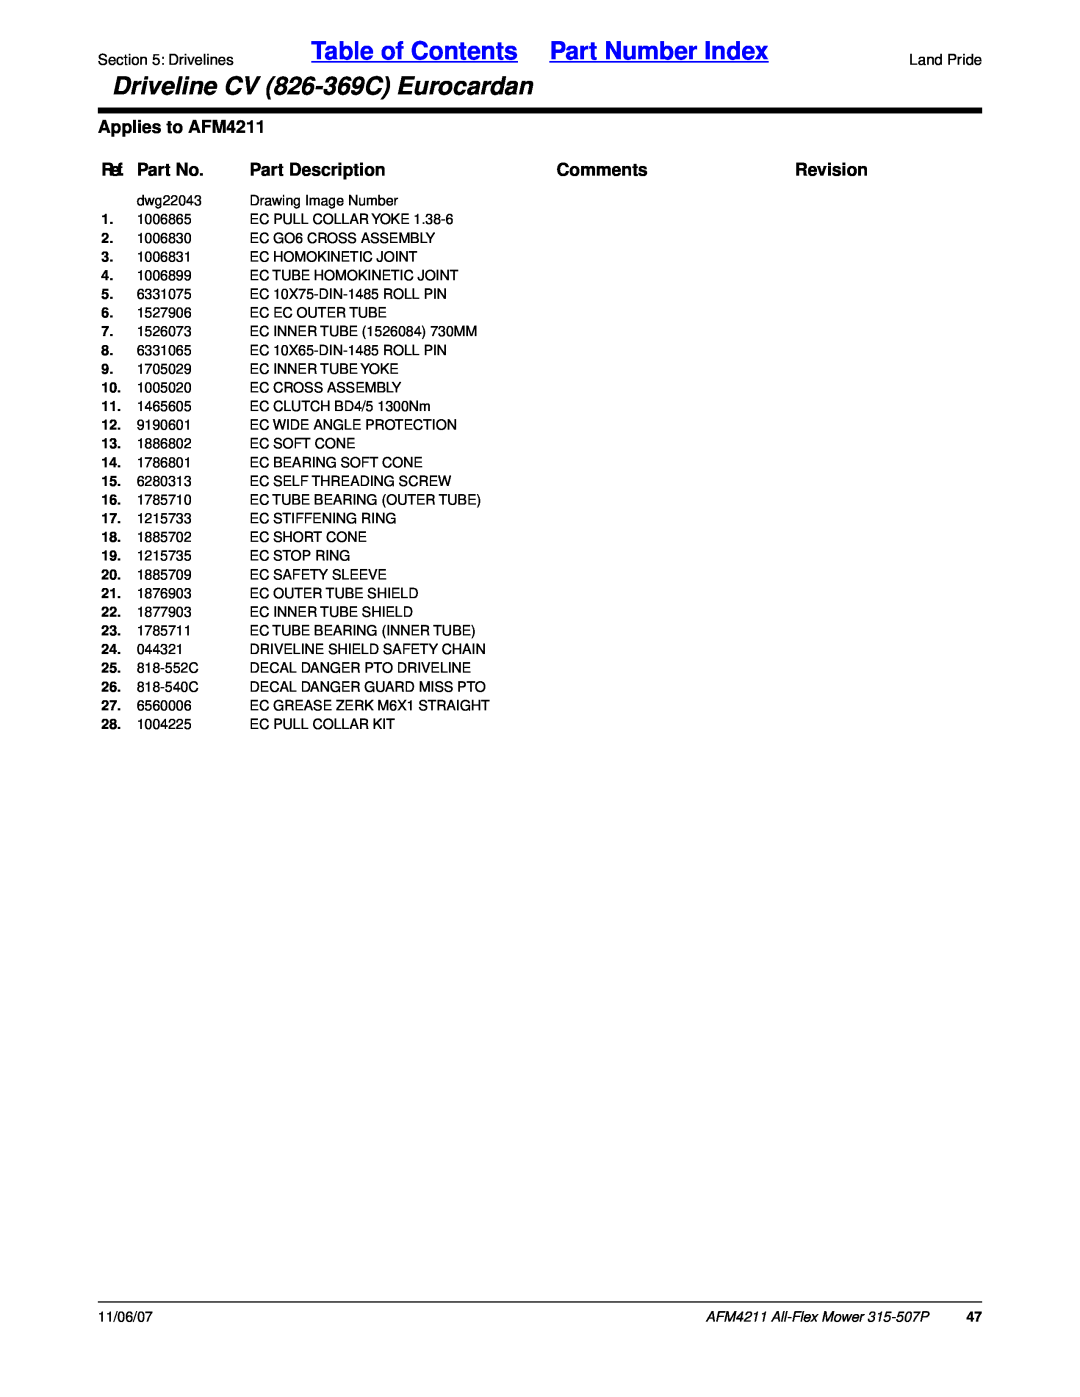 Land Pride 315-507P Table of Contents Part Number Index, Driveline CV 826-369CEurocardan, Applies to AFM4211, Ref. Part No 